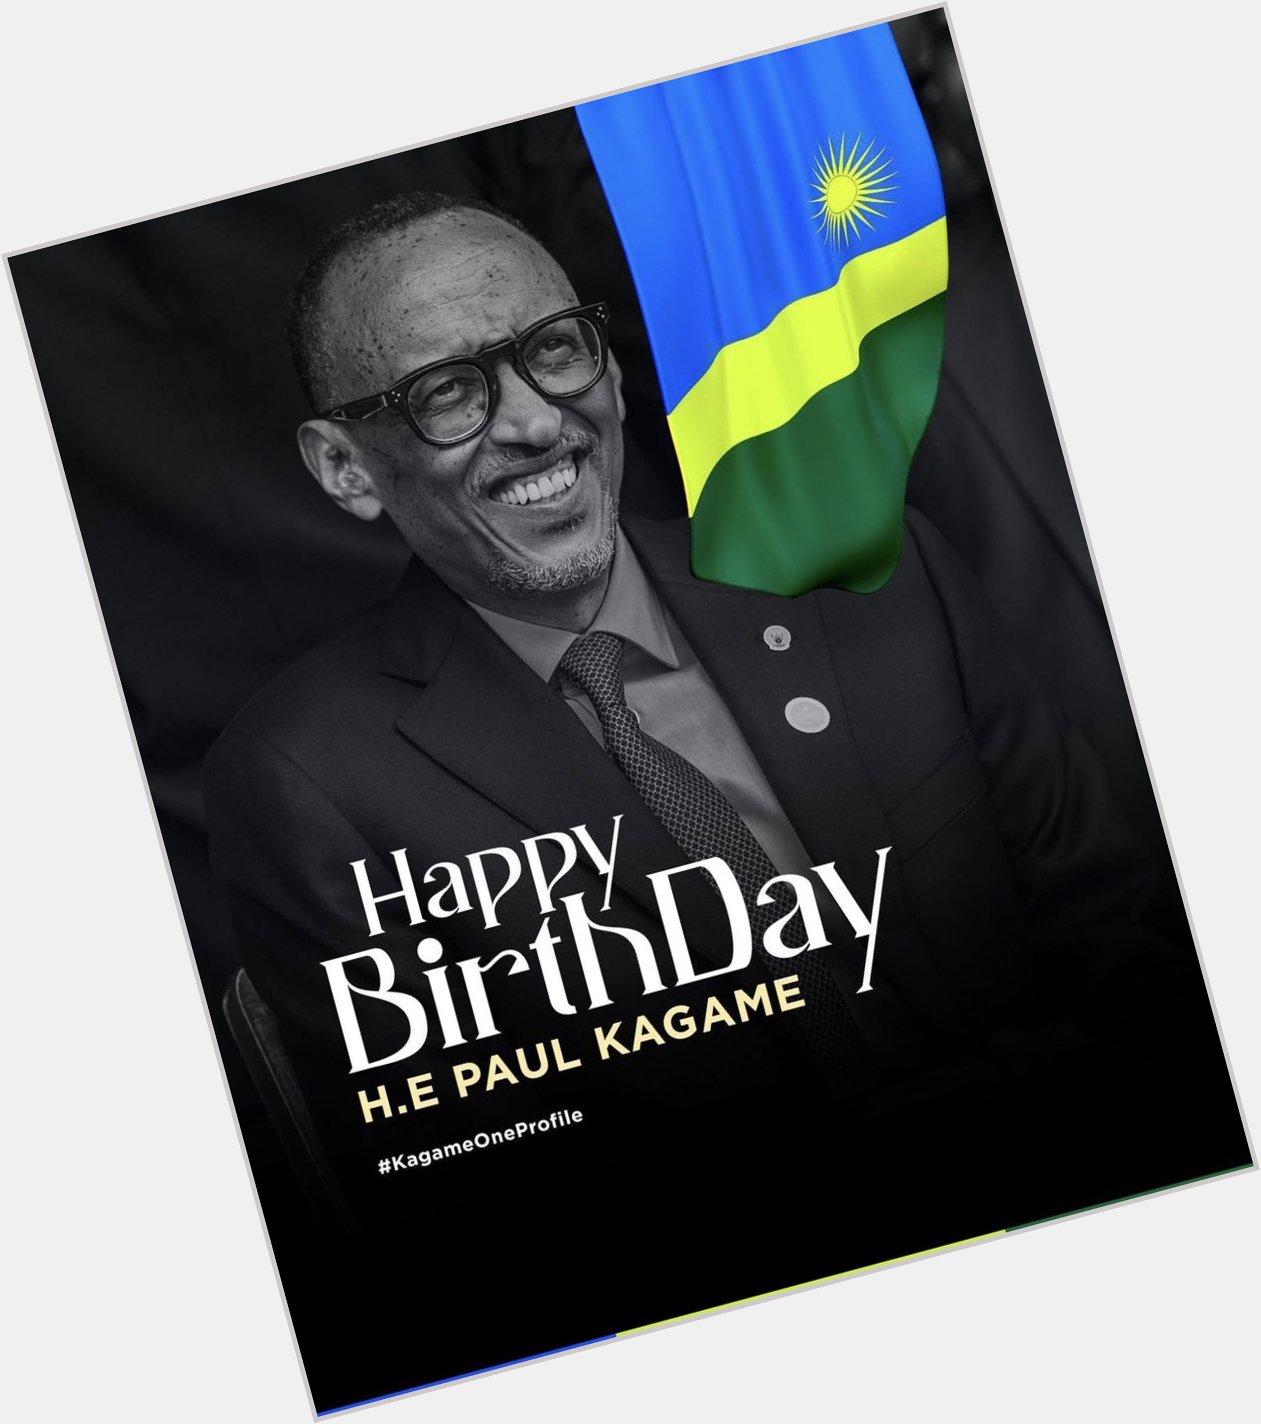 Happy Birthday H.E Paul kagame 